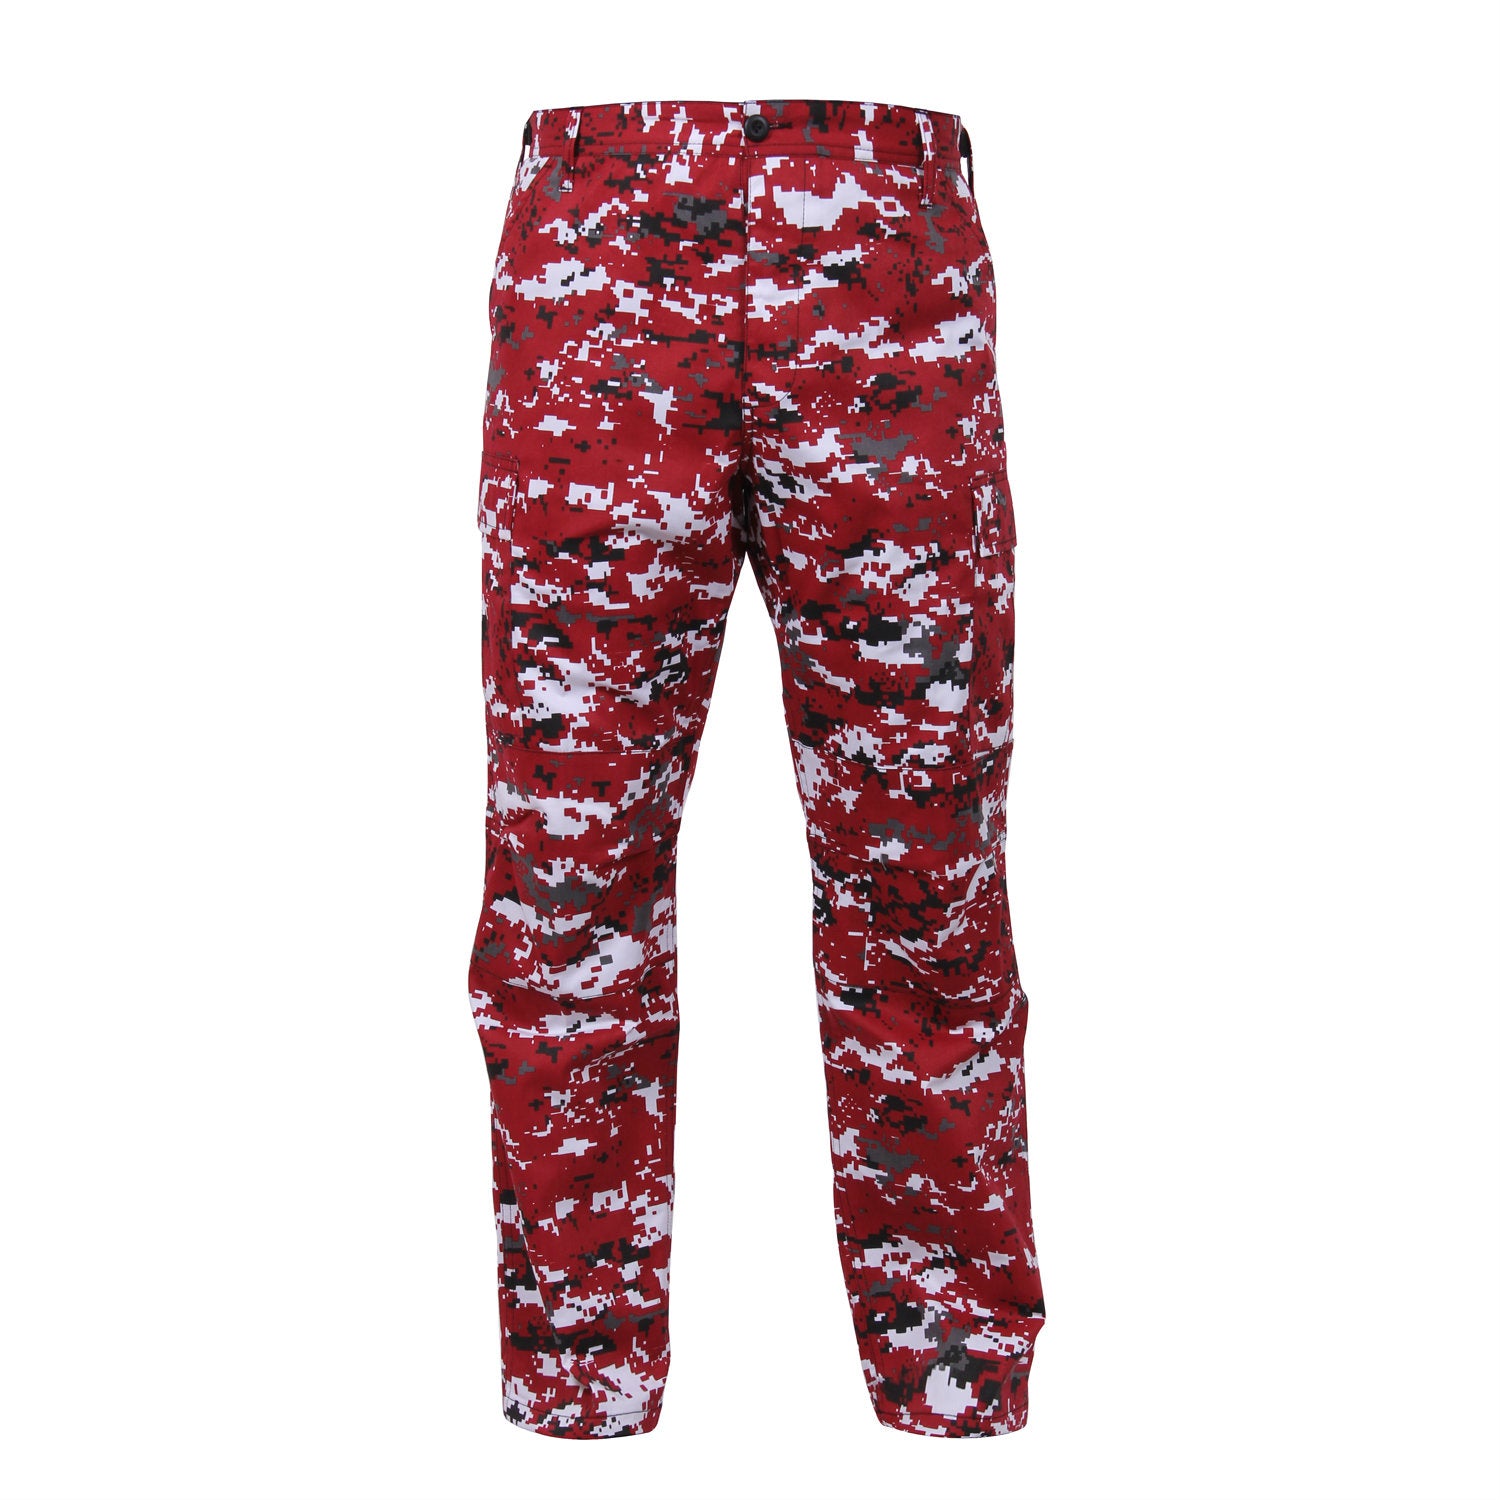 Red Digital Camouflage BDU Pants - Army Navy Gear